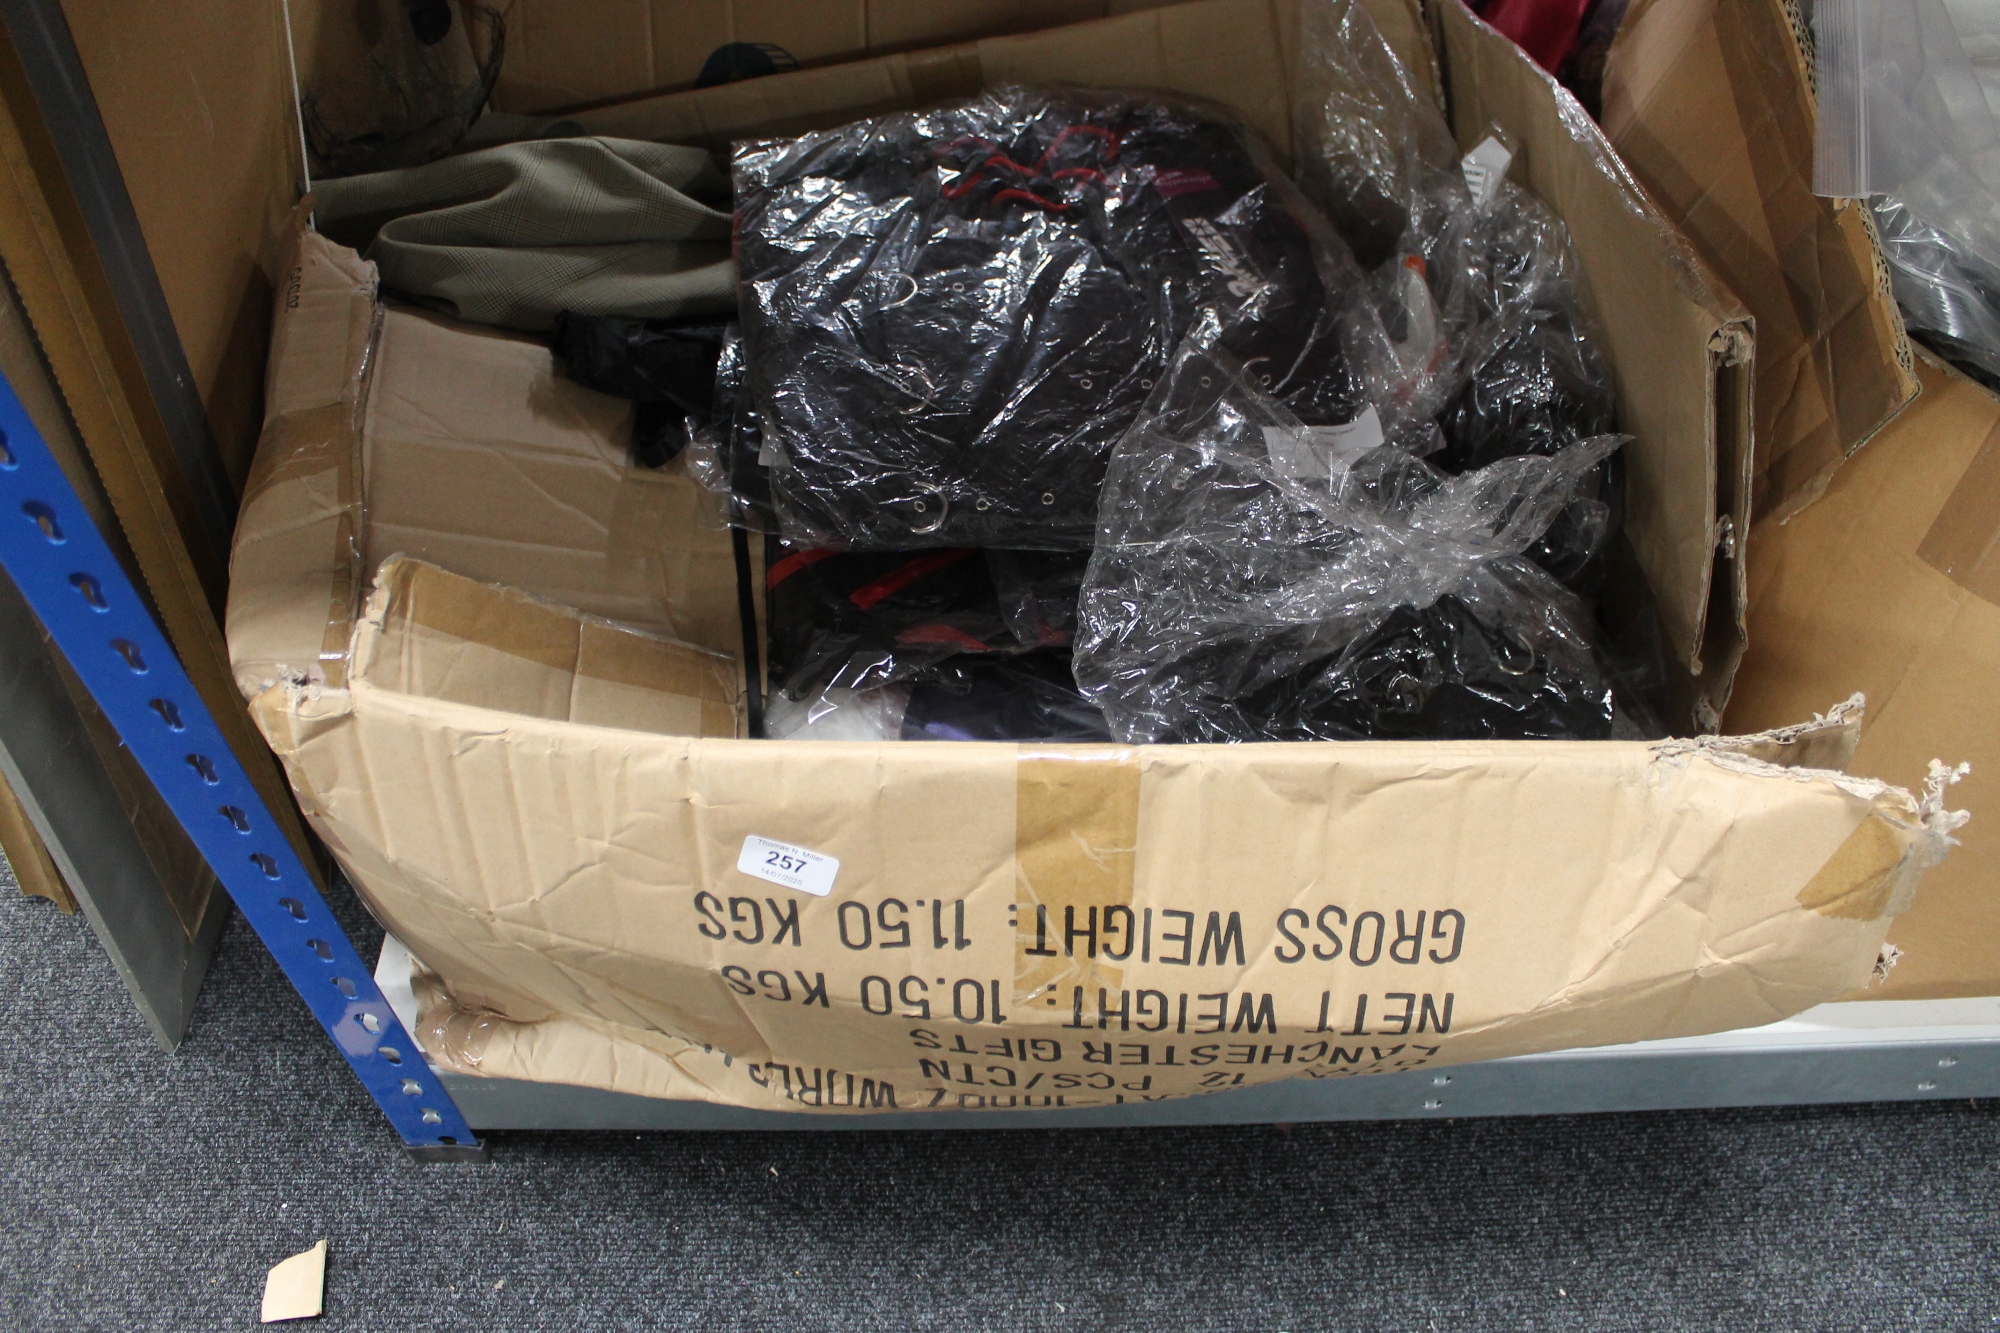 A box of a quantity of Phaze clothing